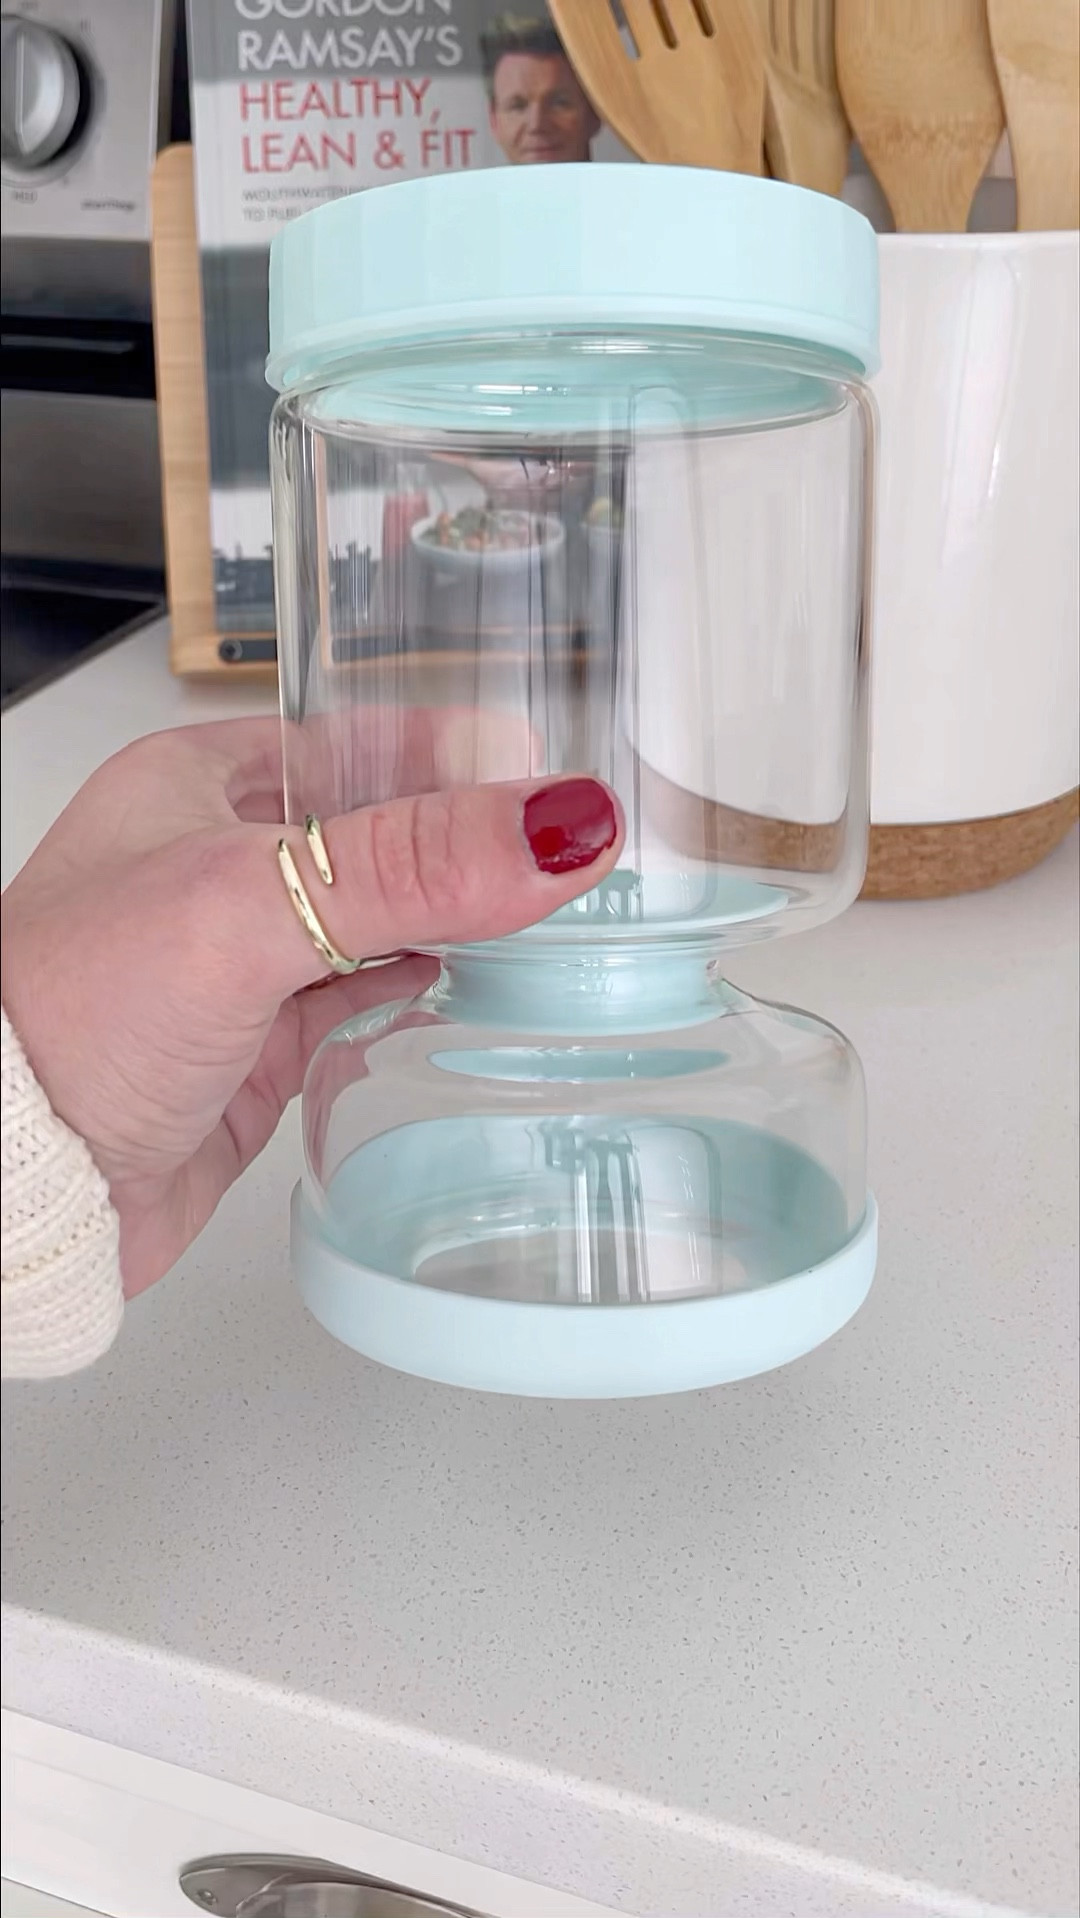 Luvan Glass Pickle Jar, 34oz Olive … curated on LTK